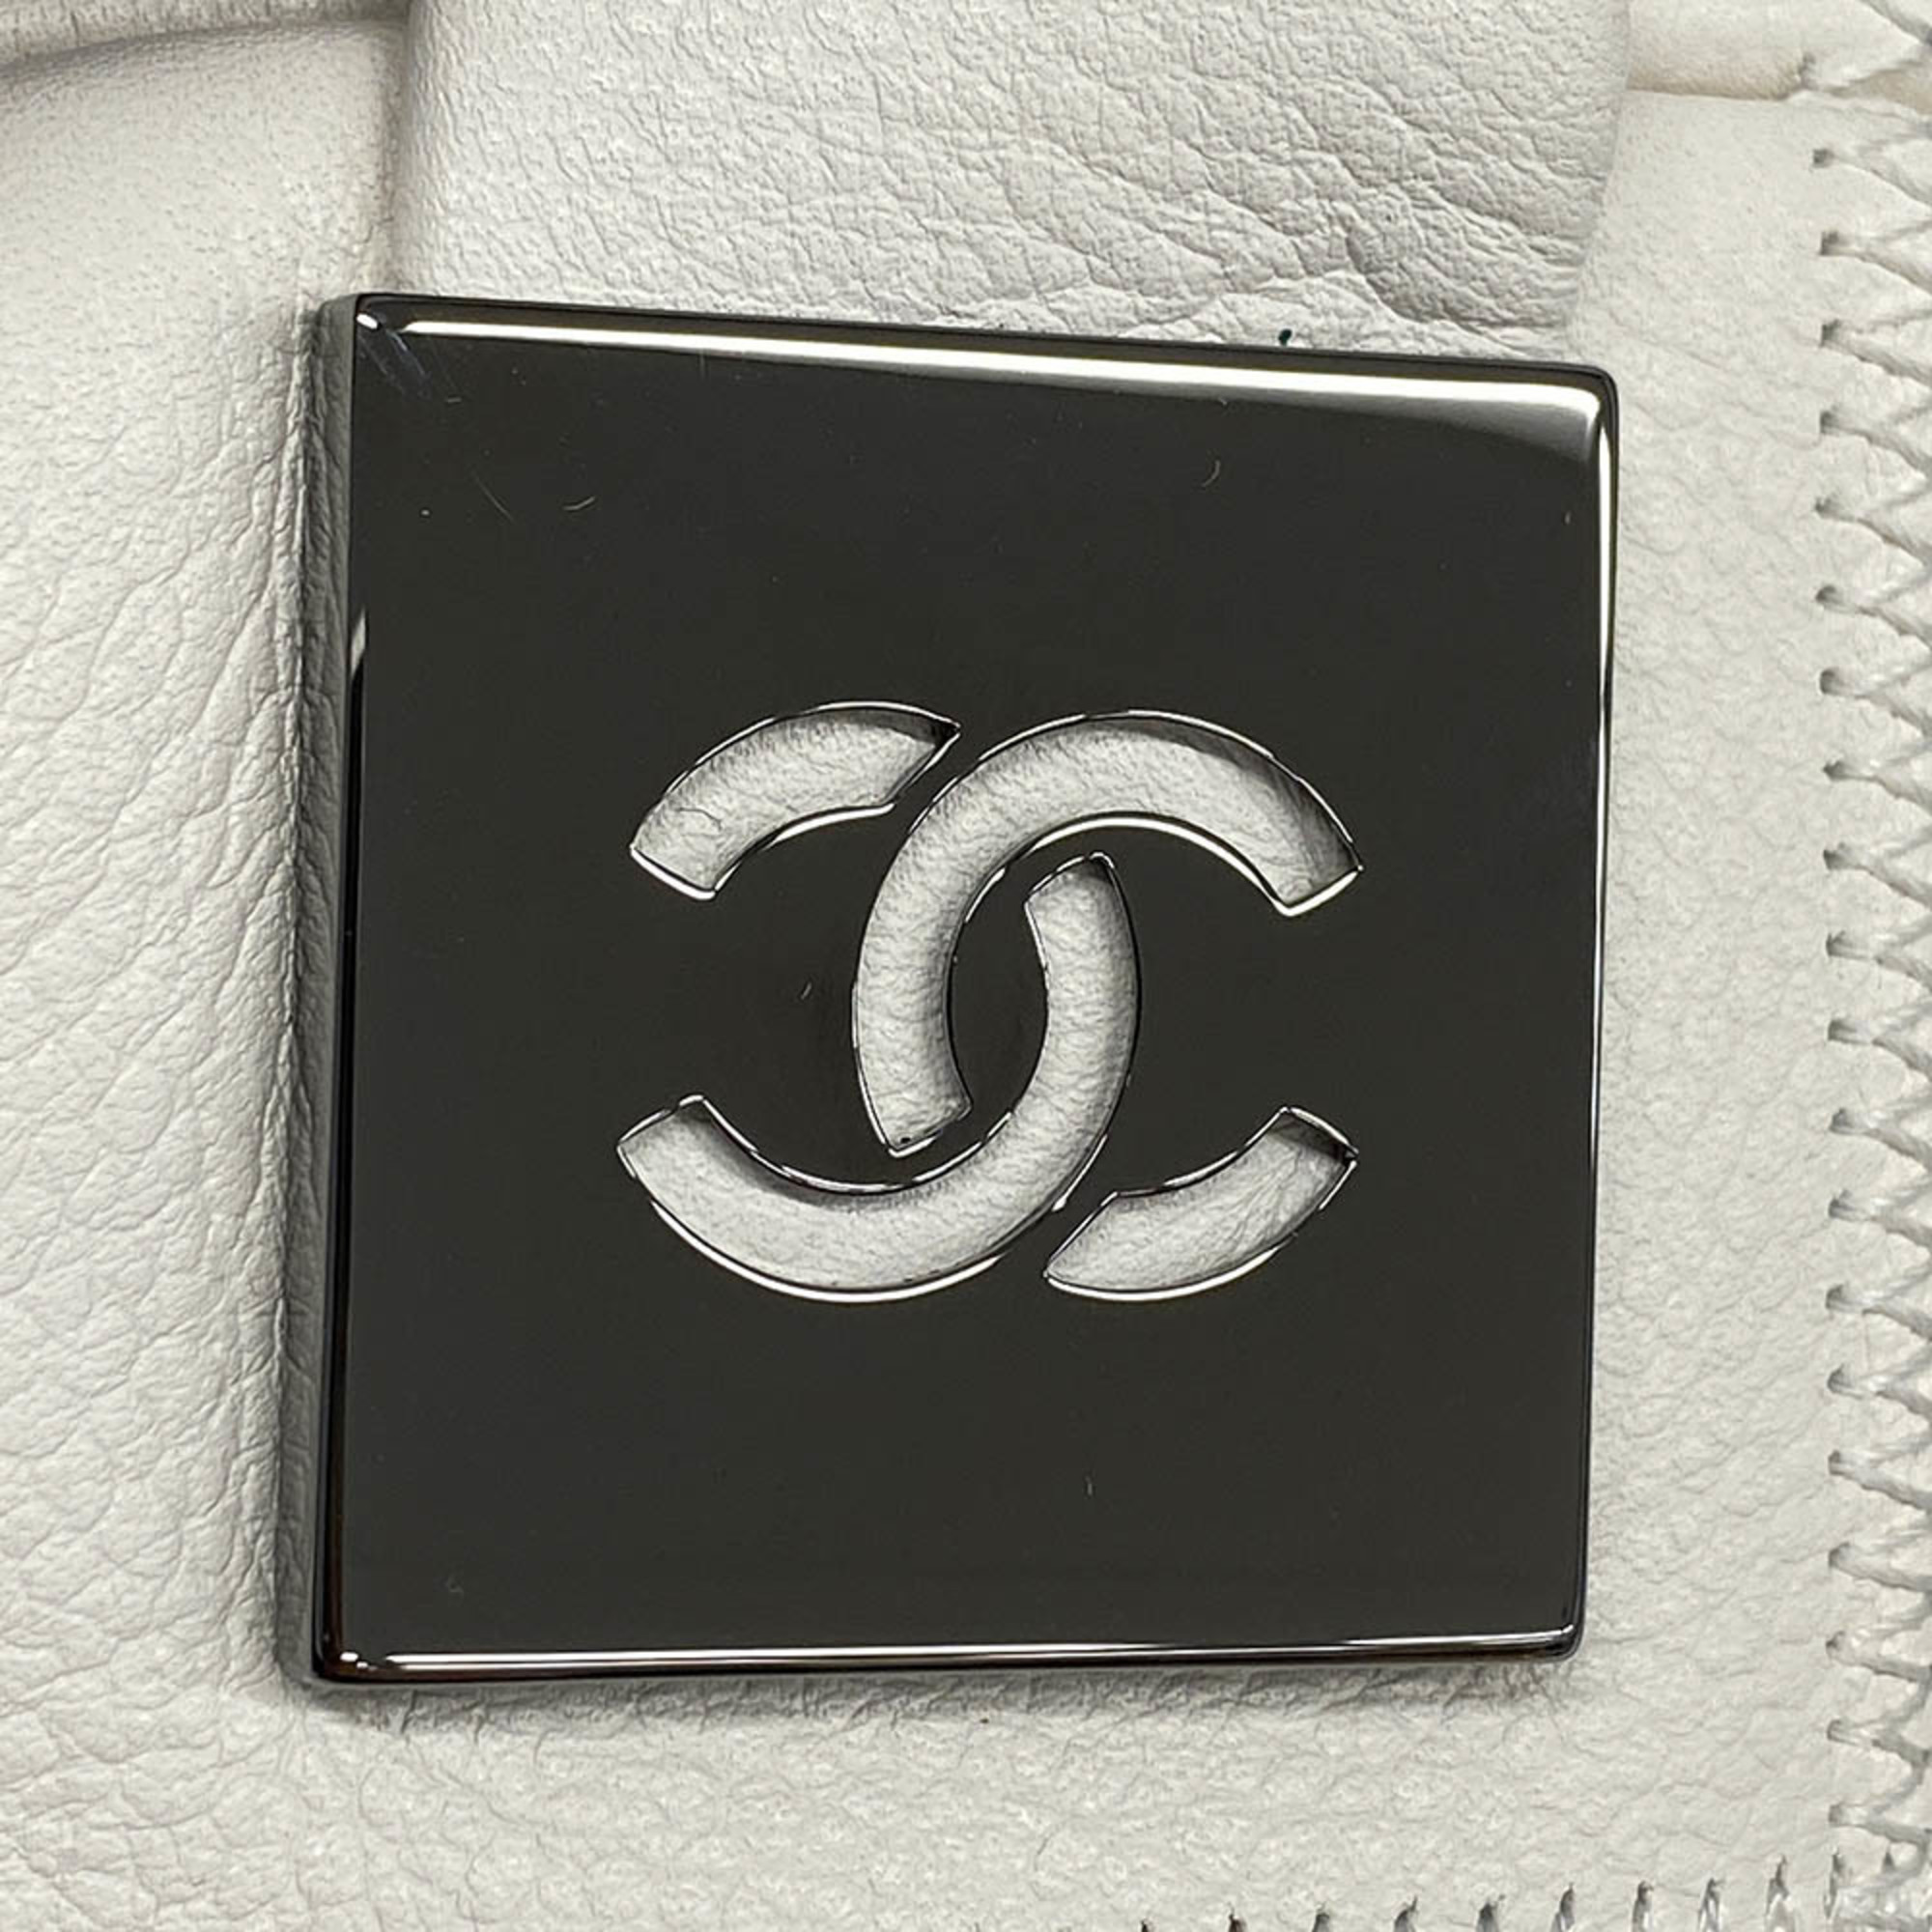 Chanel handbag chocolate bar caviar skin white ladies